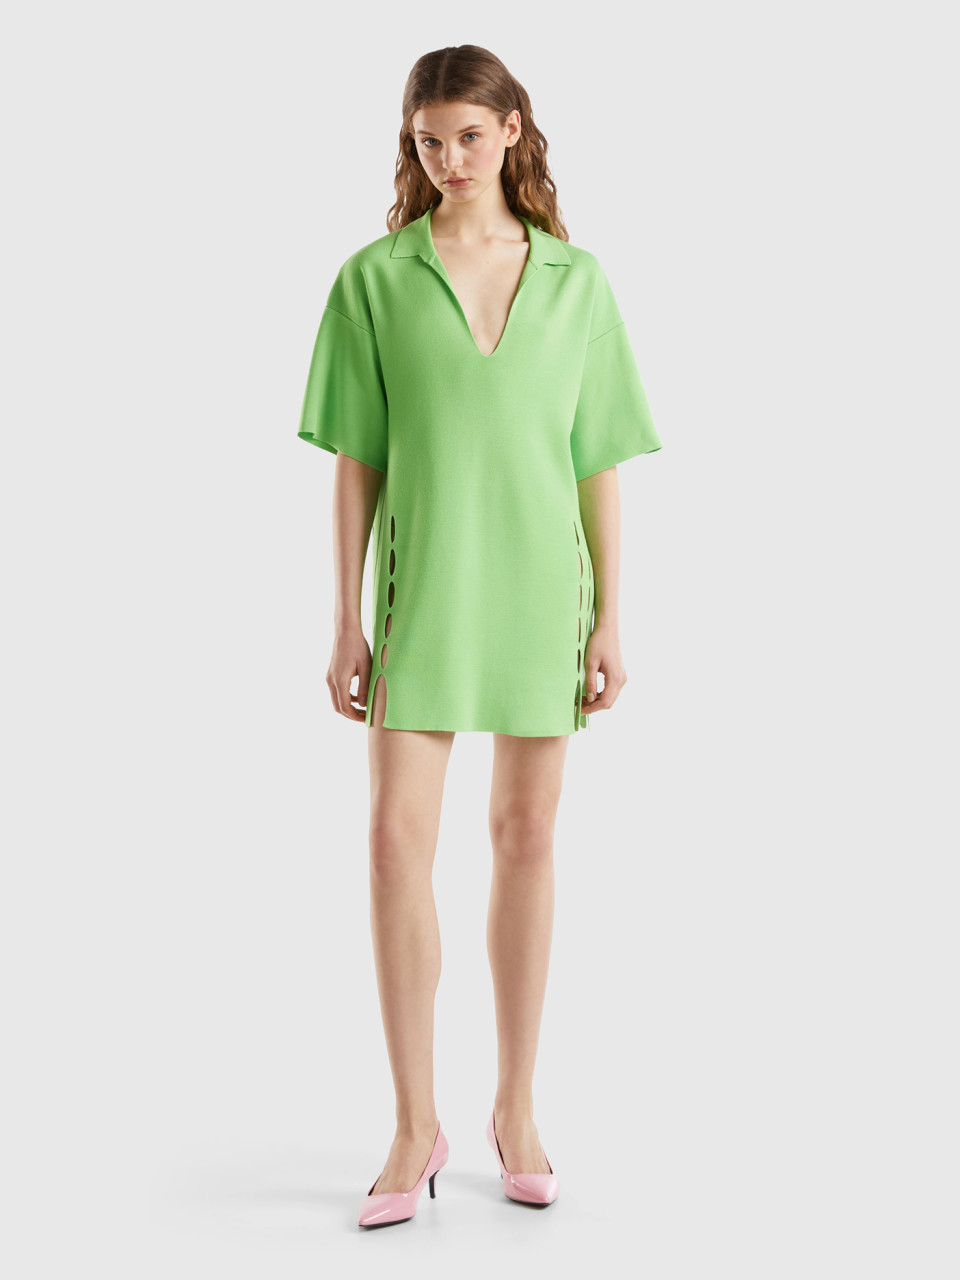 Benetton, Vestido De Estilo Polo Troquelado, Verde Claro, Mujer